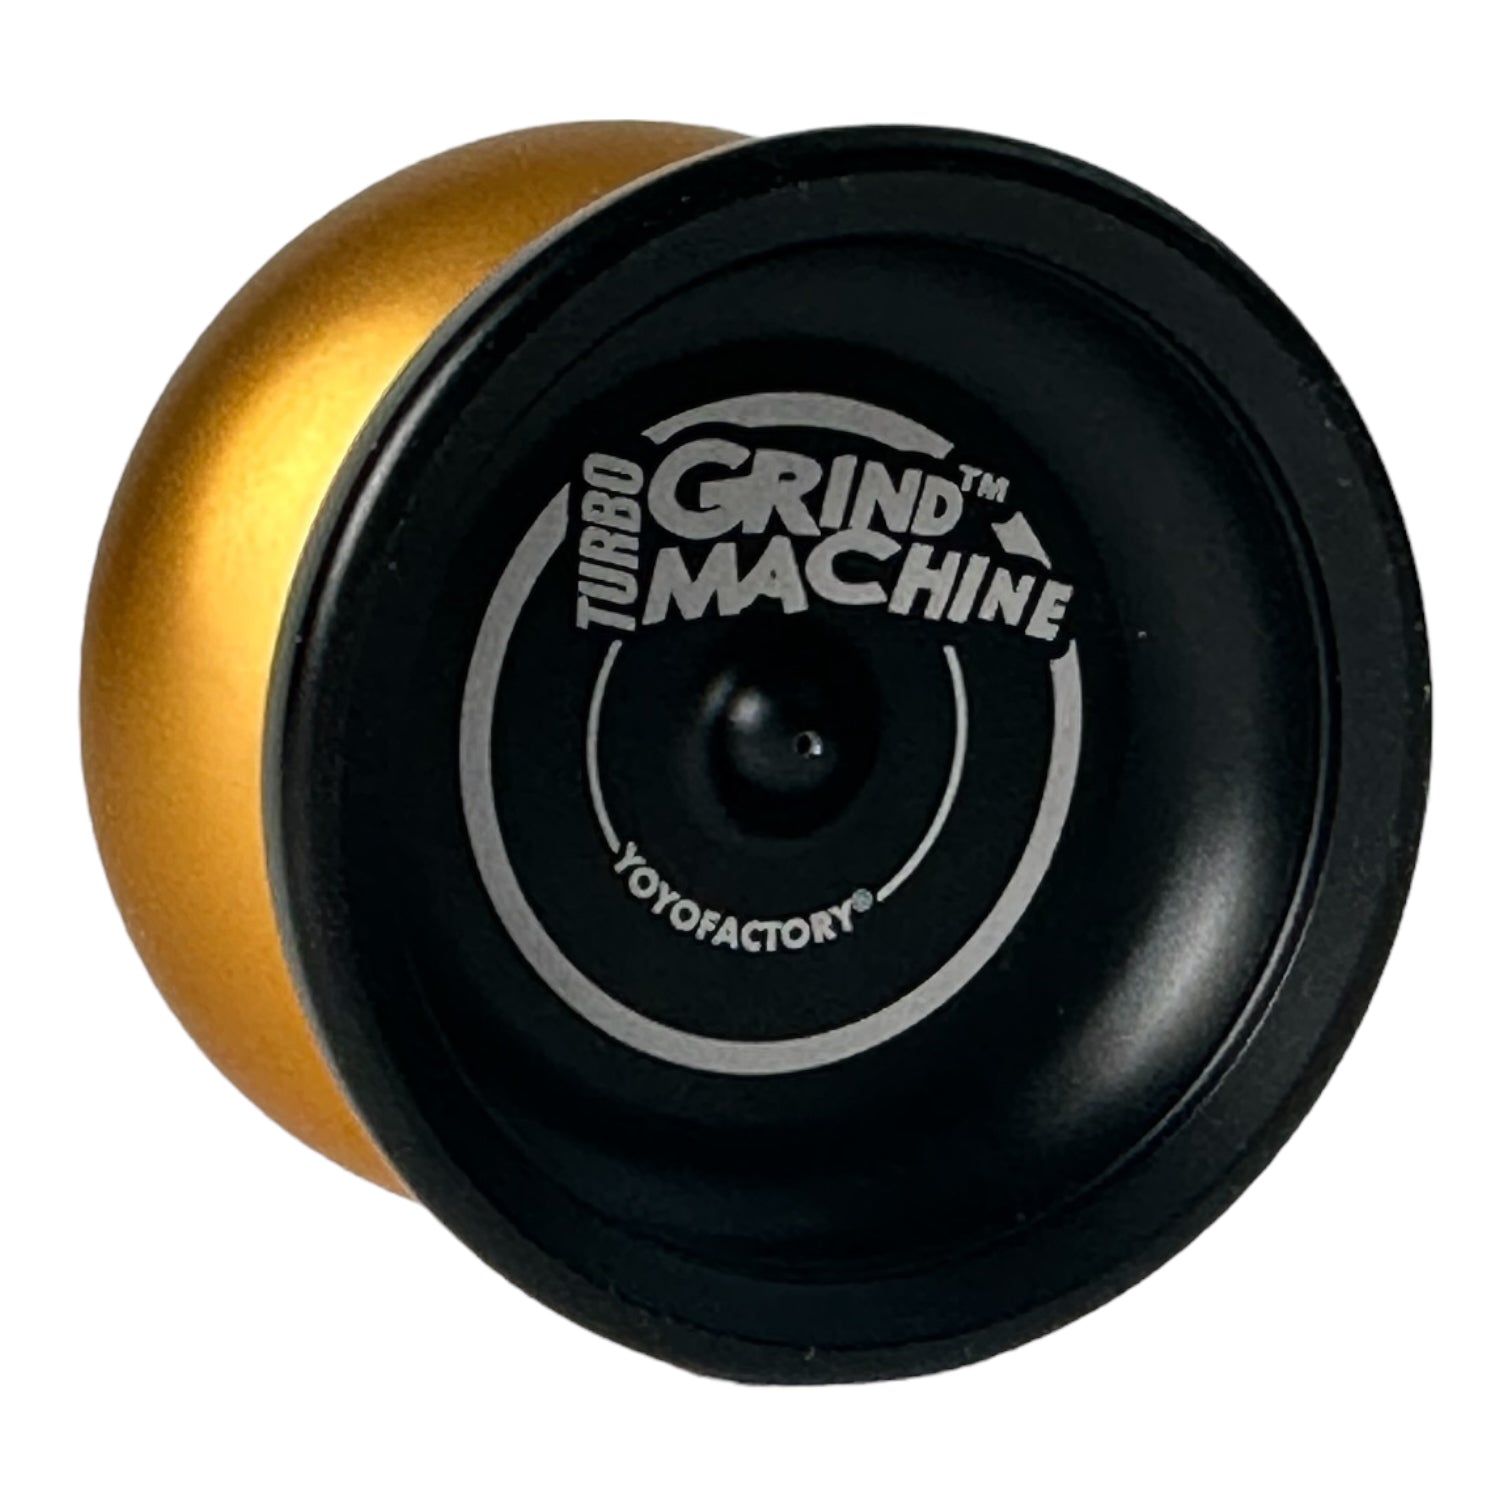 Turbo Grind Machine gold and black yoyo